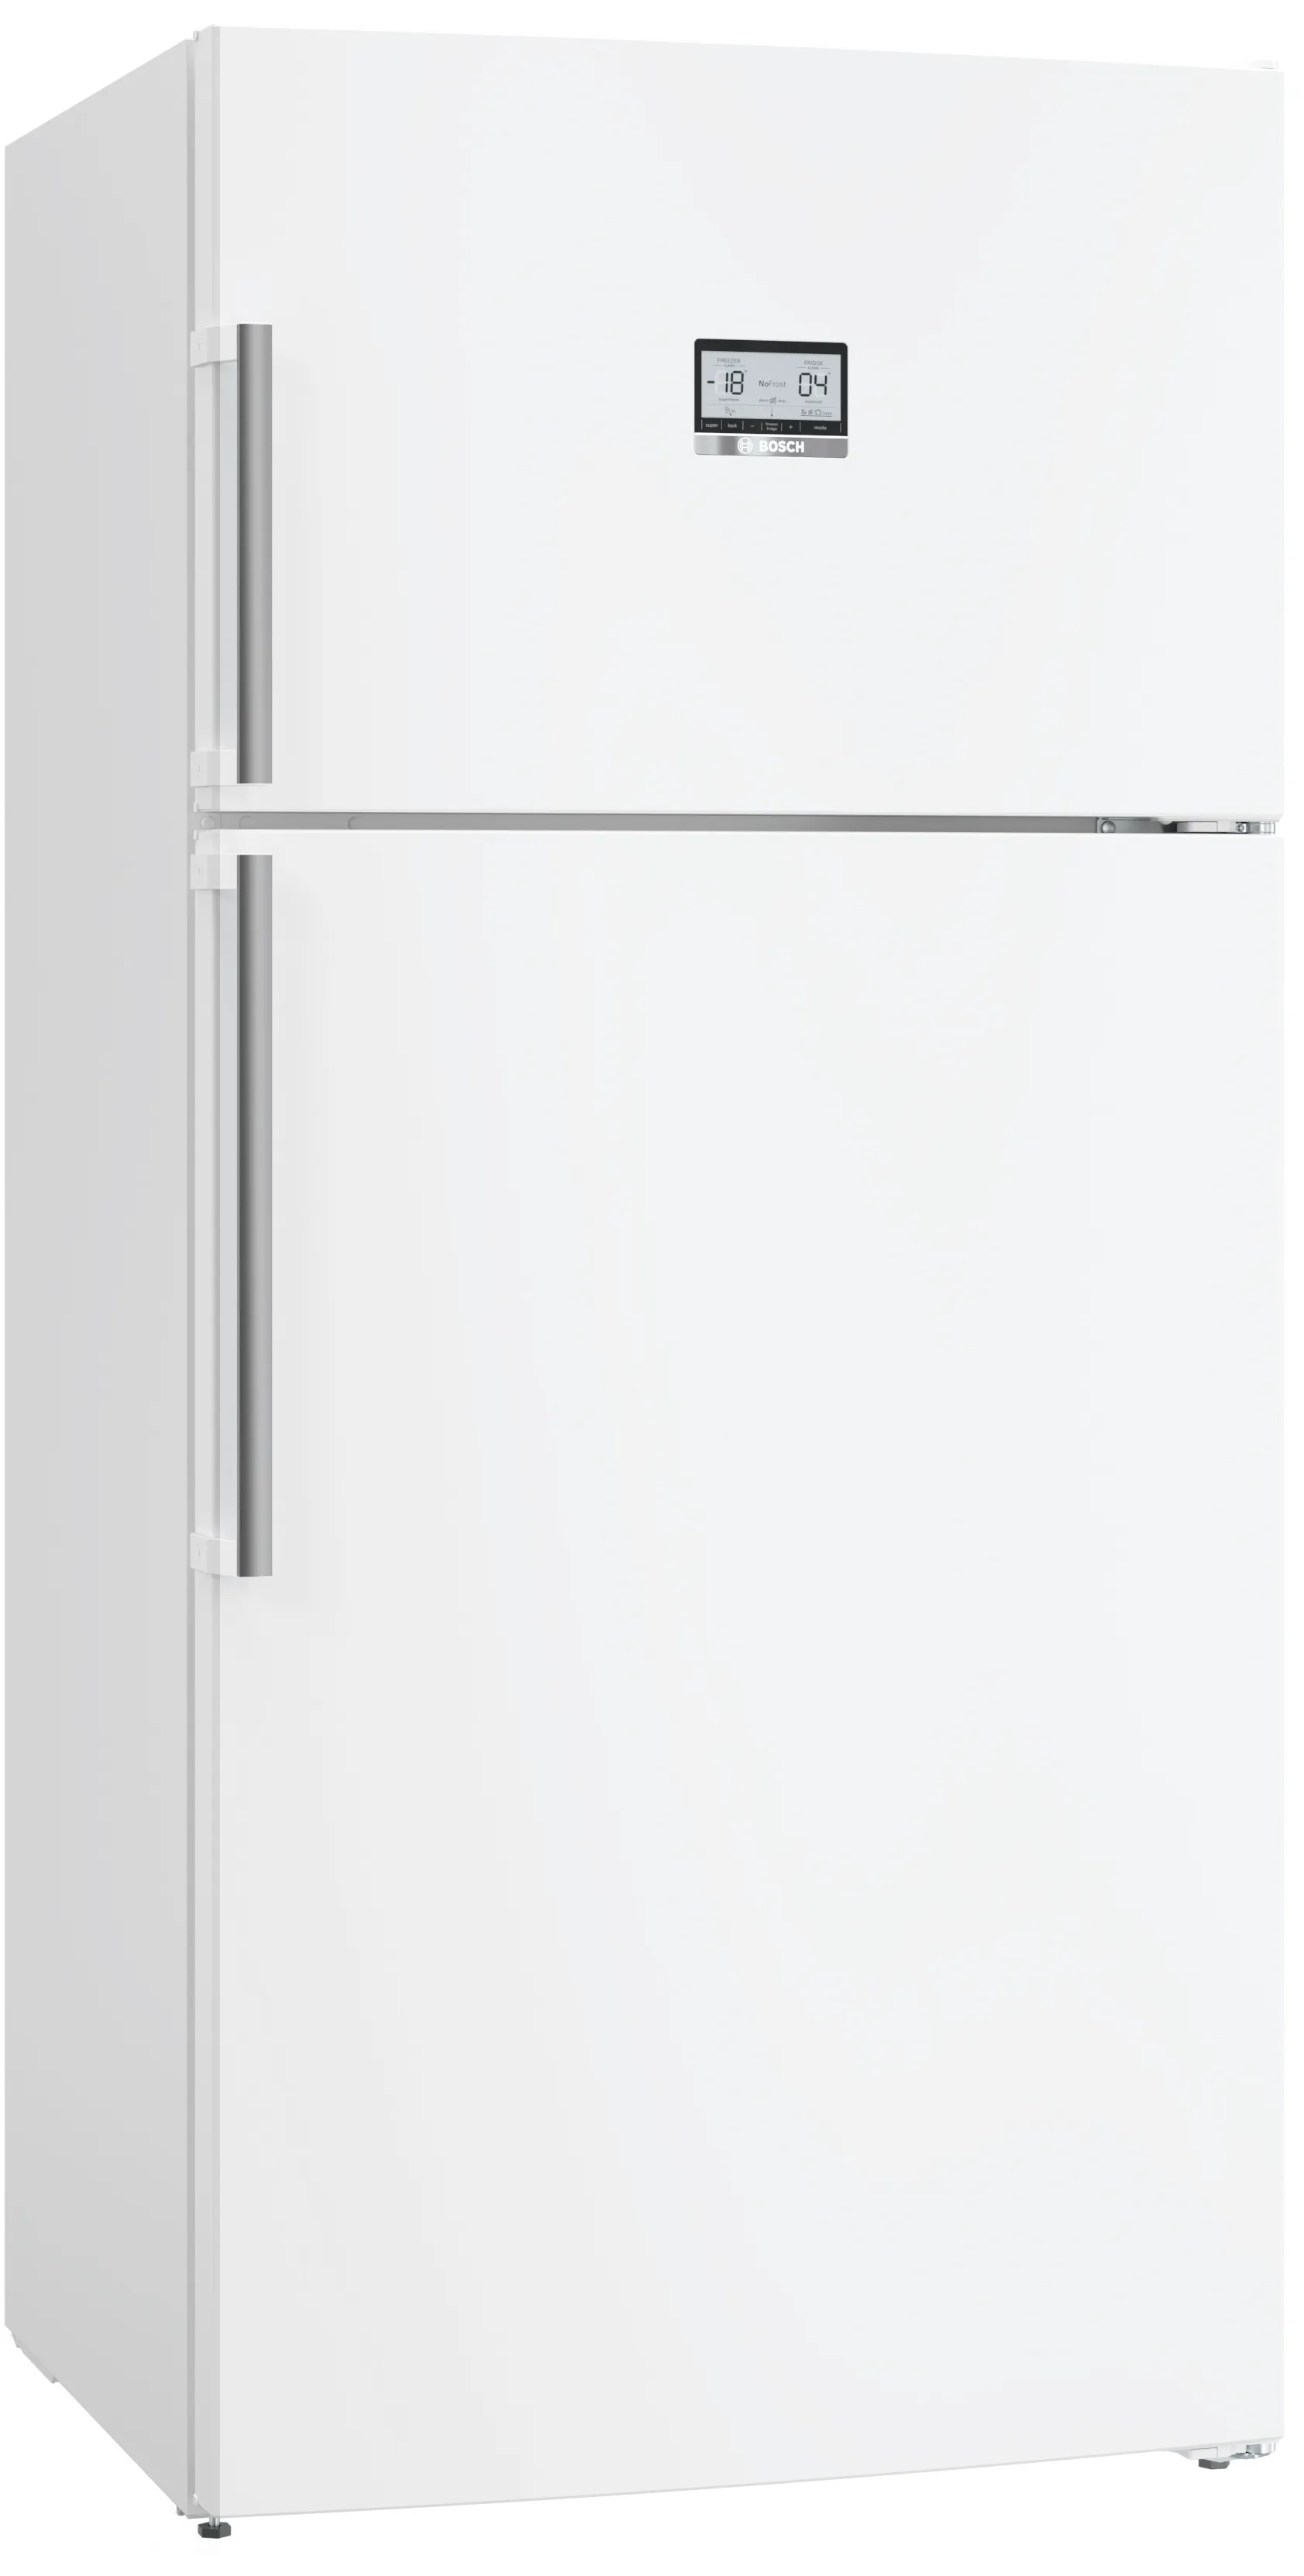 Series 6 free-standing fridge-freezer with freezer at top 186 x 86 cm White 